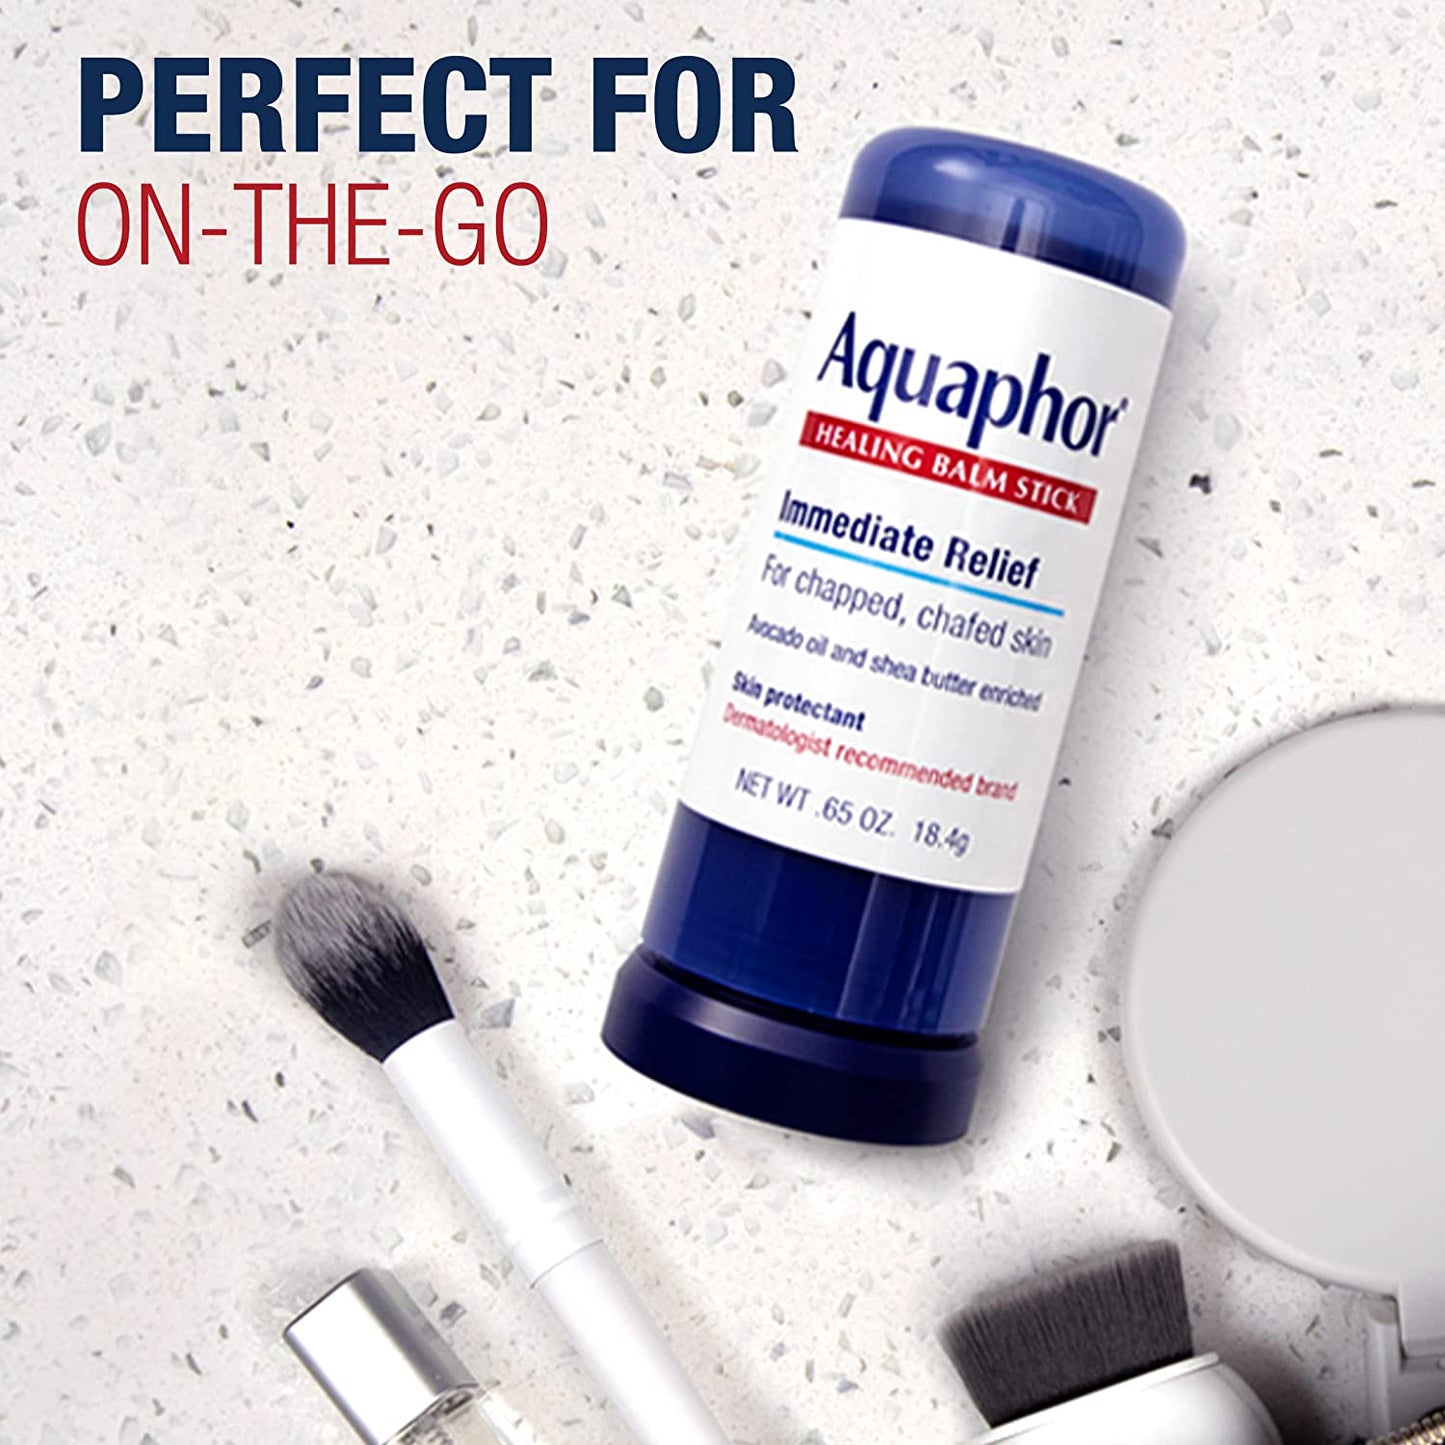 Aquaphor Healing, Balm Stick Immediate Relief Skin Protectant - 18.4g / 0.65 oz